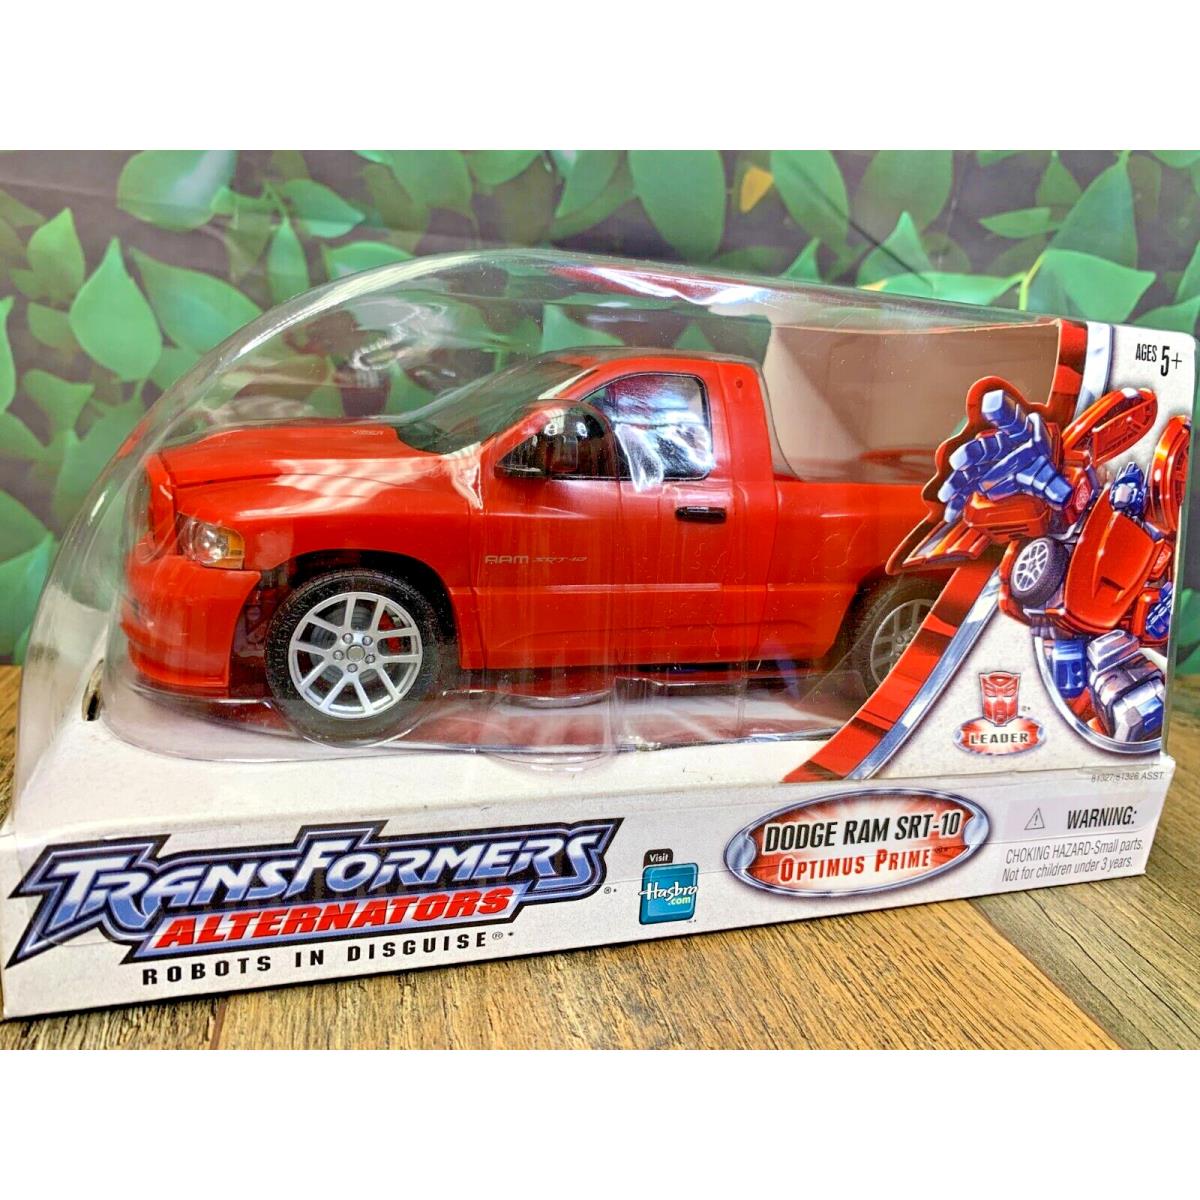 Hasbro Transformers Alternators Dodge Ram SRT-10 Optimus Prime